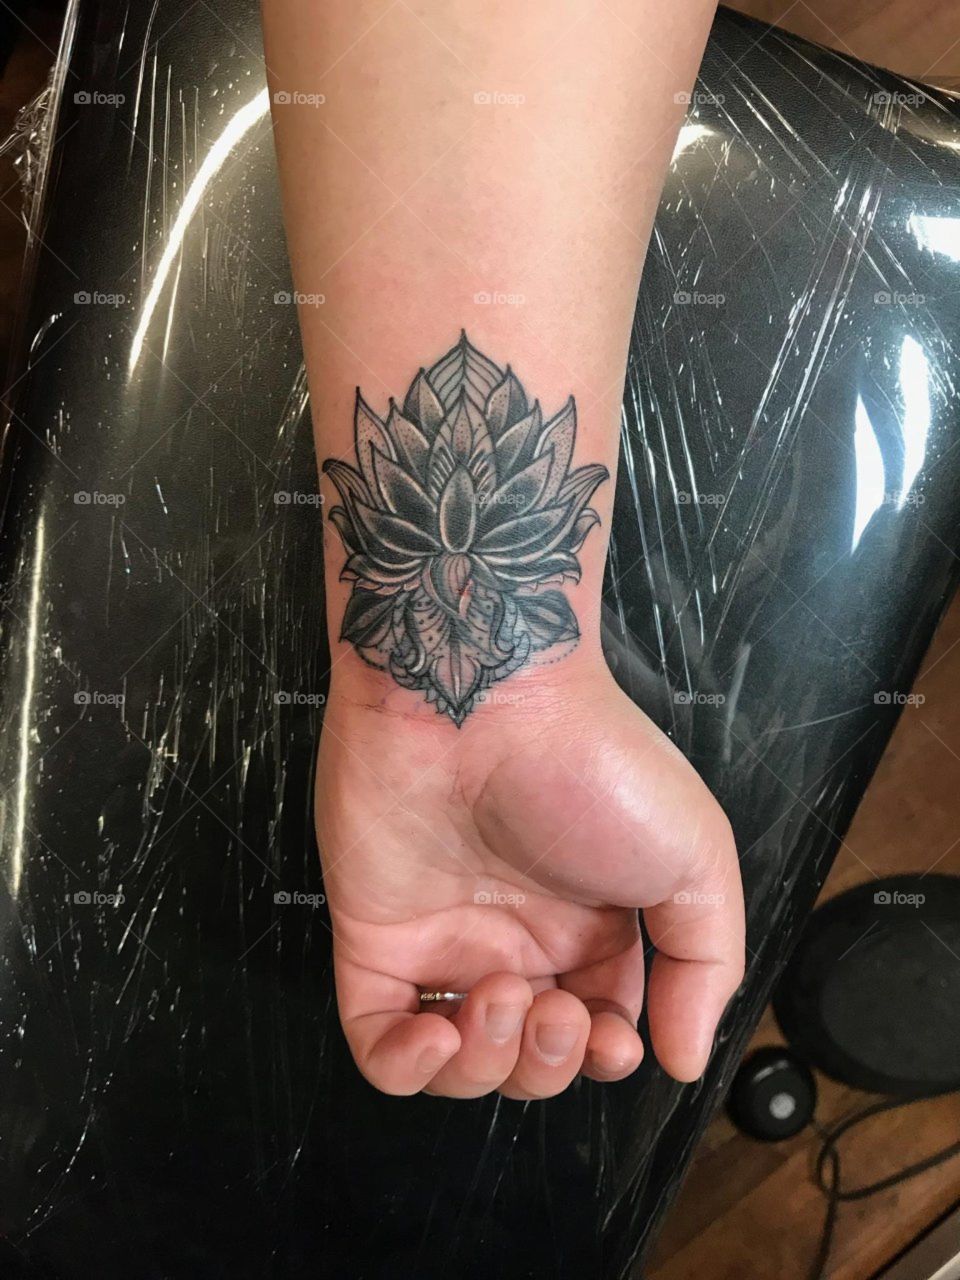 Inked|Cover up tattoo|Lotus|Moving on
Artist: Ash 
IG: Likhang Tinta